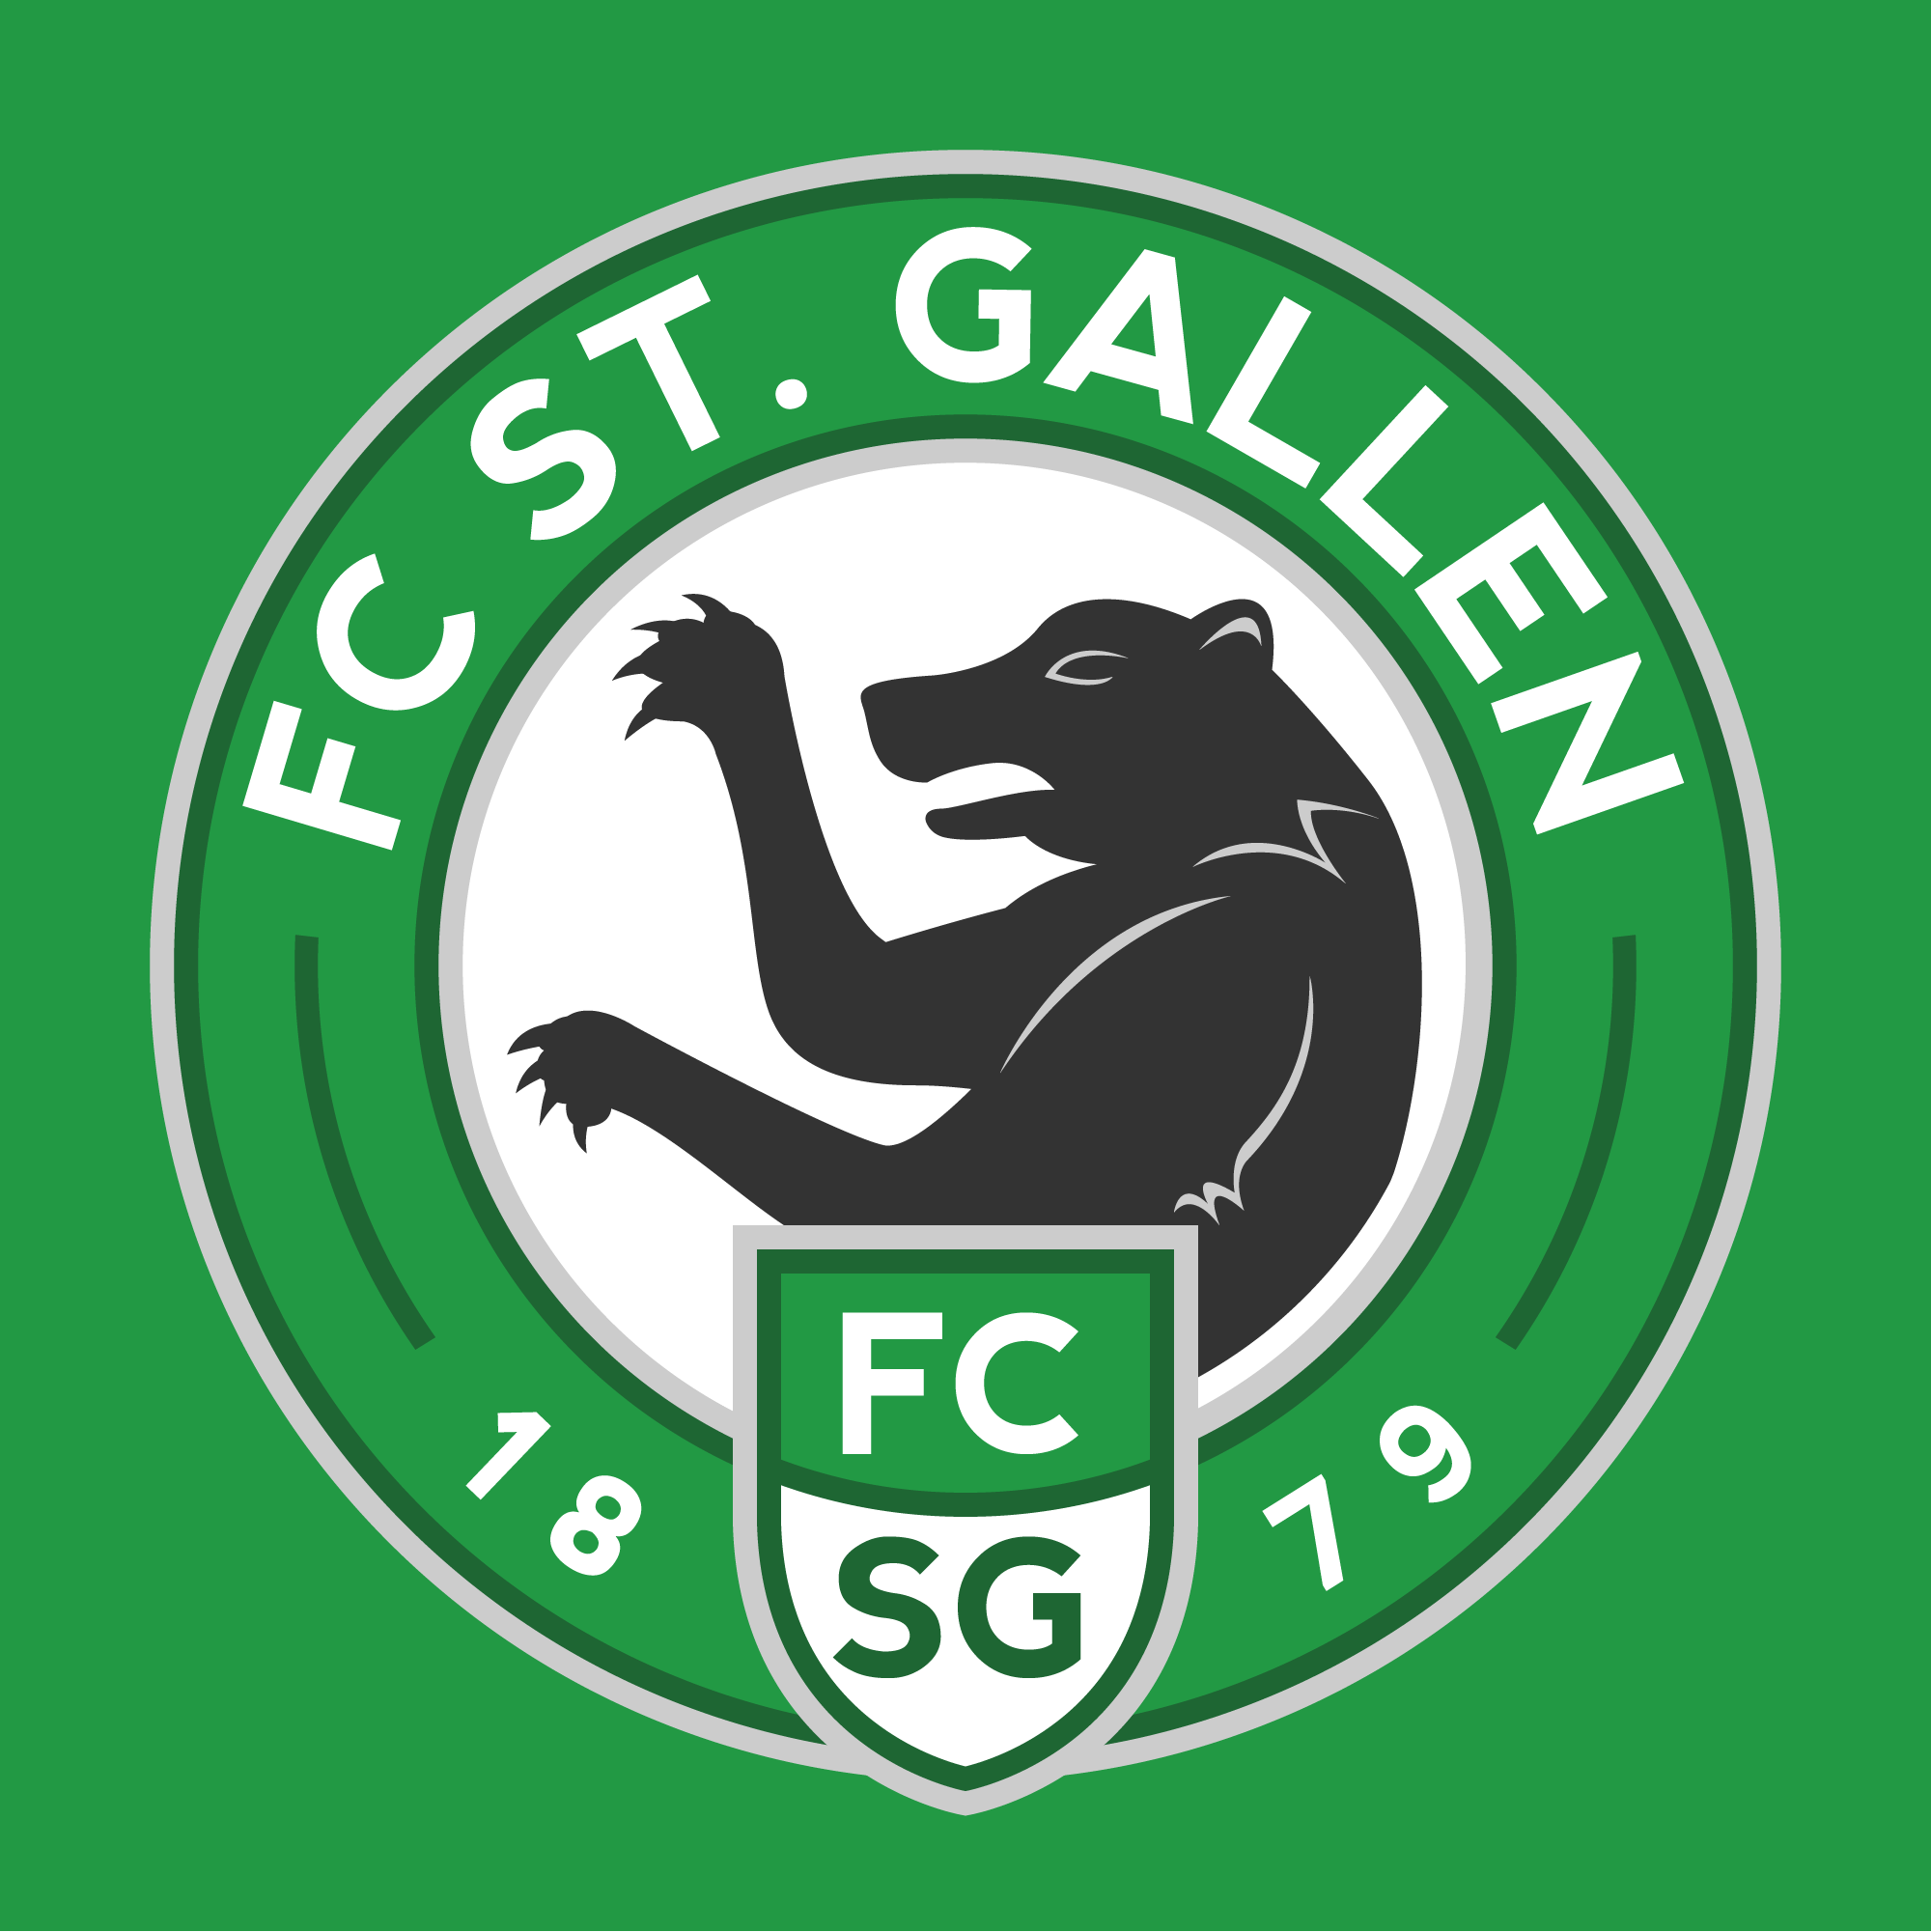 Fc st. Санкт Галлен ФК. Санкт Галлен лого. St Gallen футбольный клуб эмблема. Санкт Галлен логотип без фона.